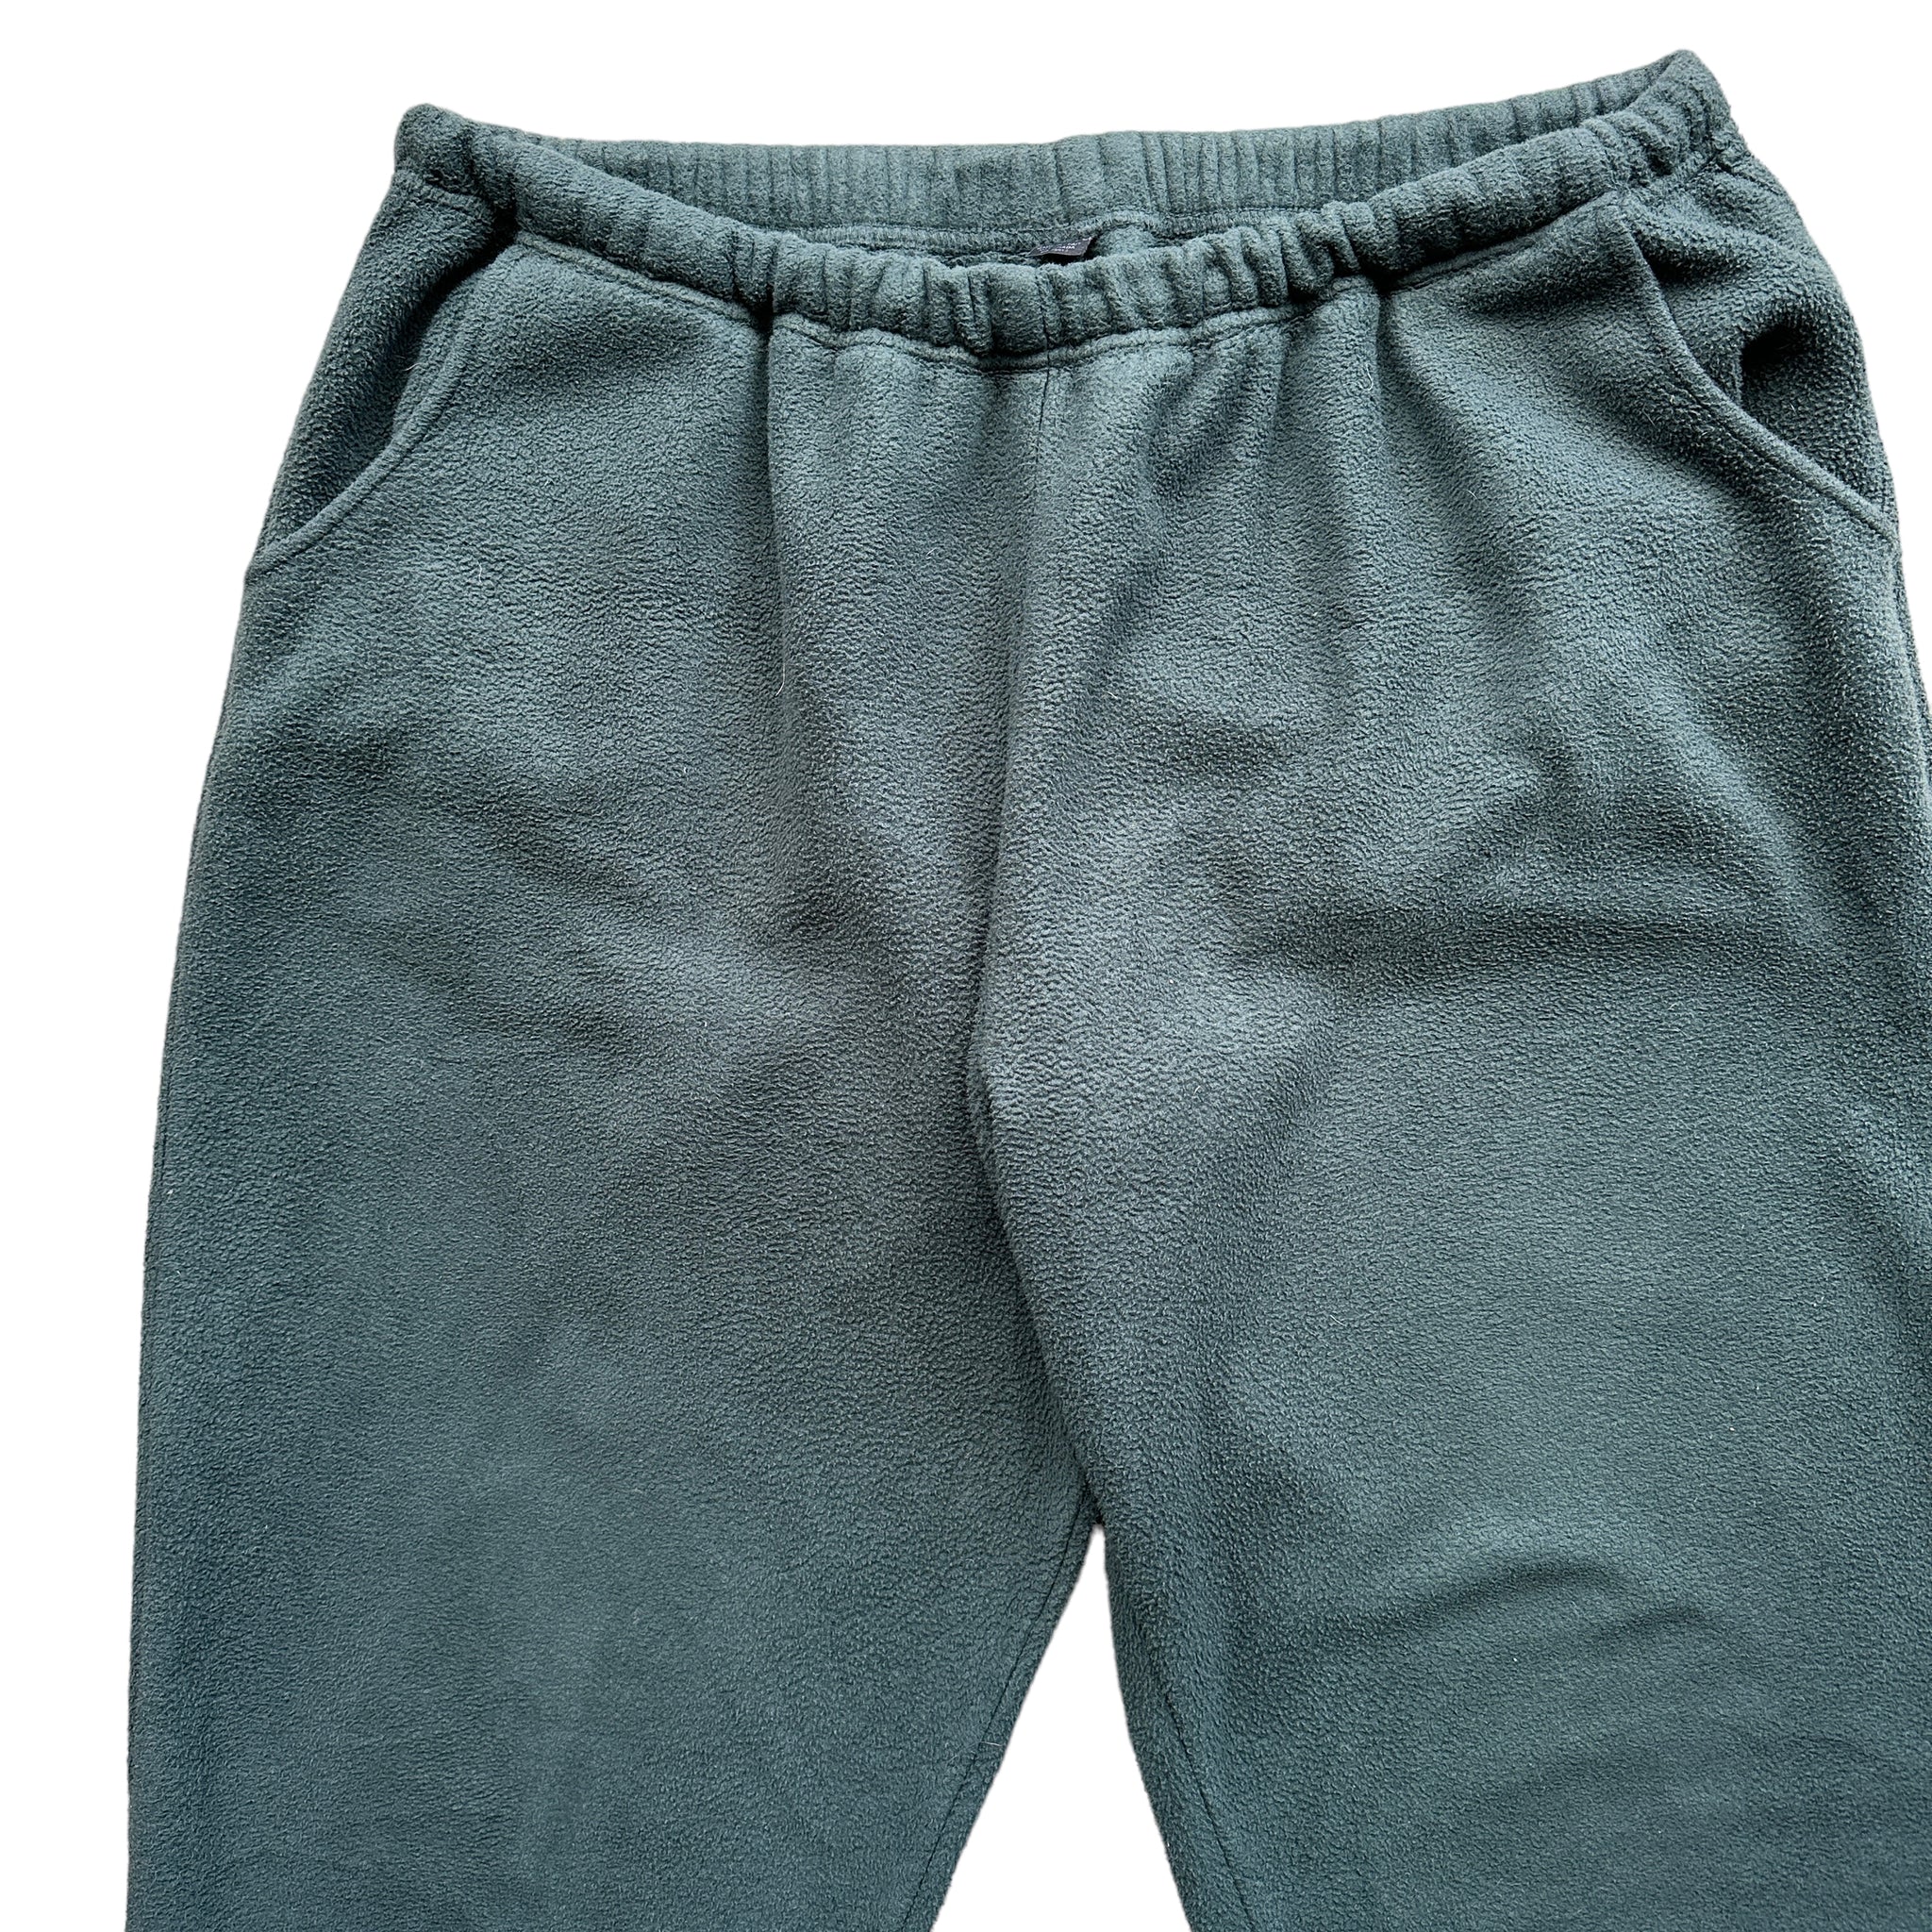 Made in canada🇨🇦 fleece pants XXL